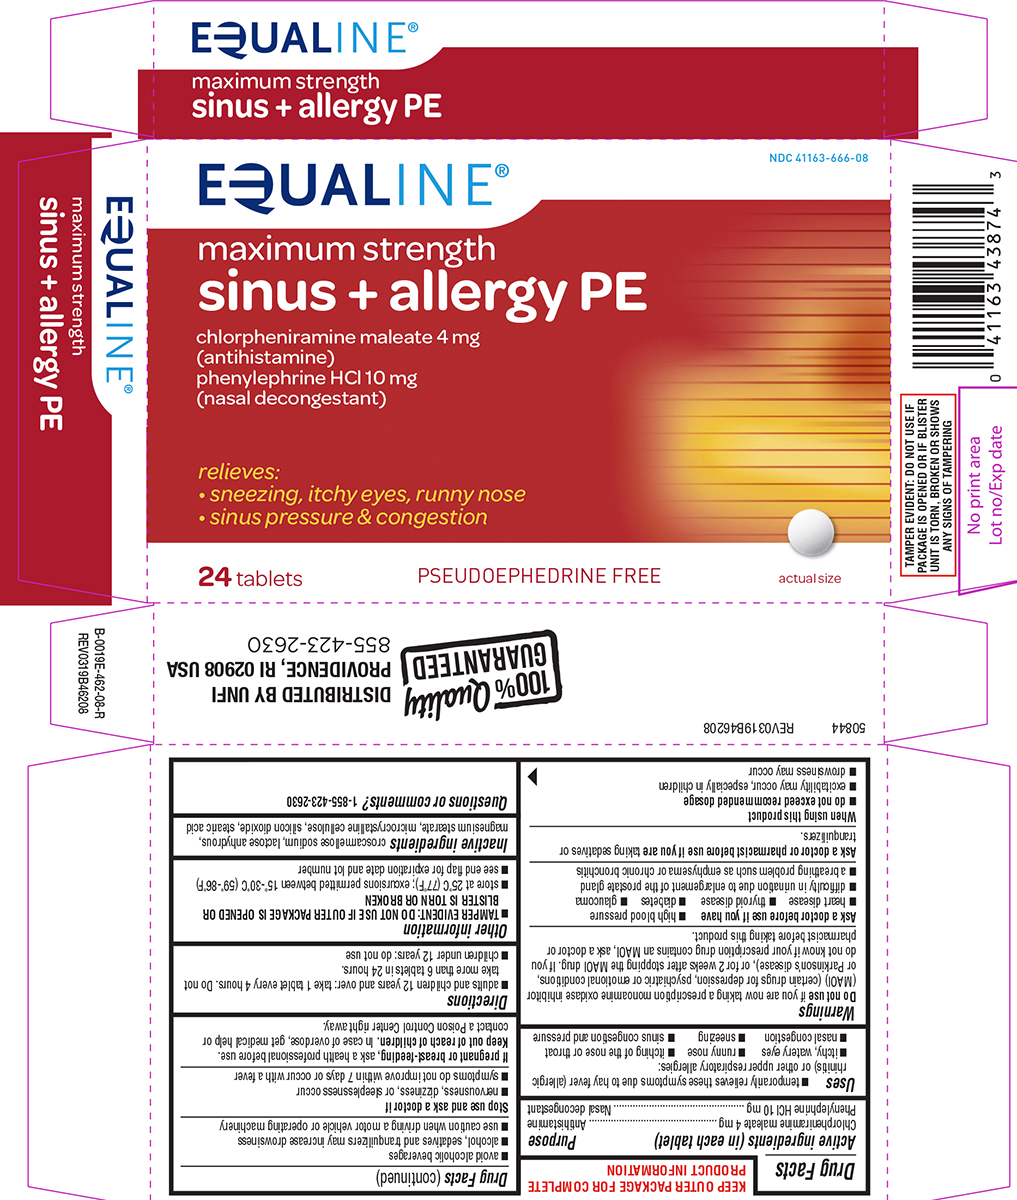 Sinus Plus Allergy Pe Maximum Strength | Chlorpheniramine Maleate, Phenylephrine Hcl Tablet while Breastfeeding